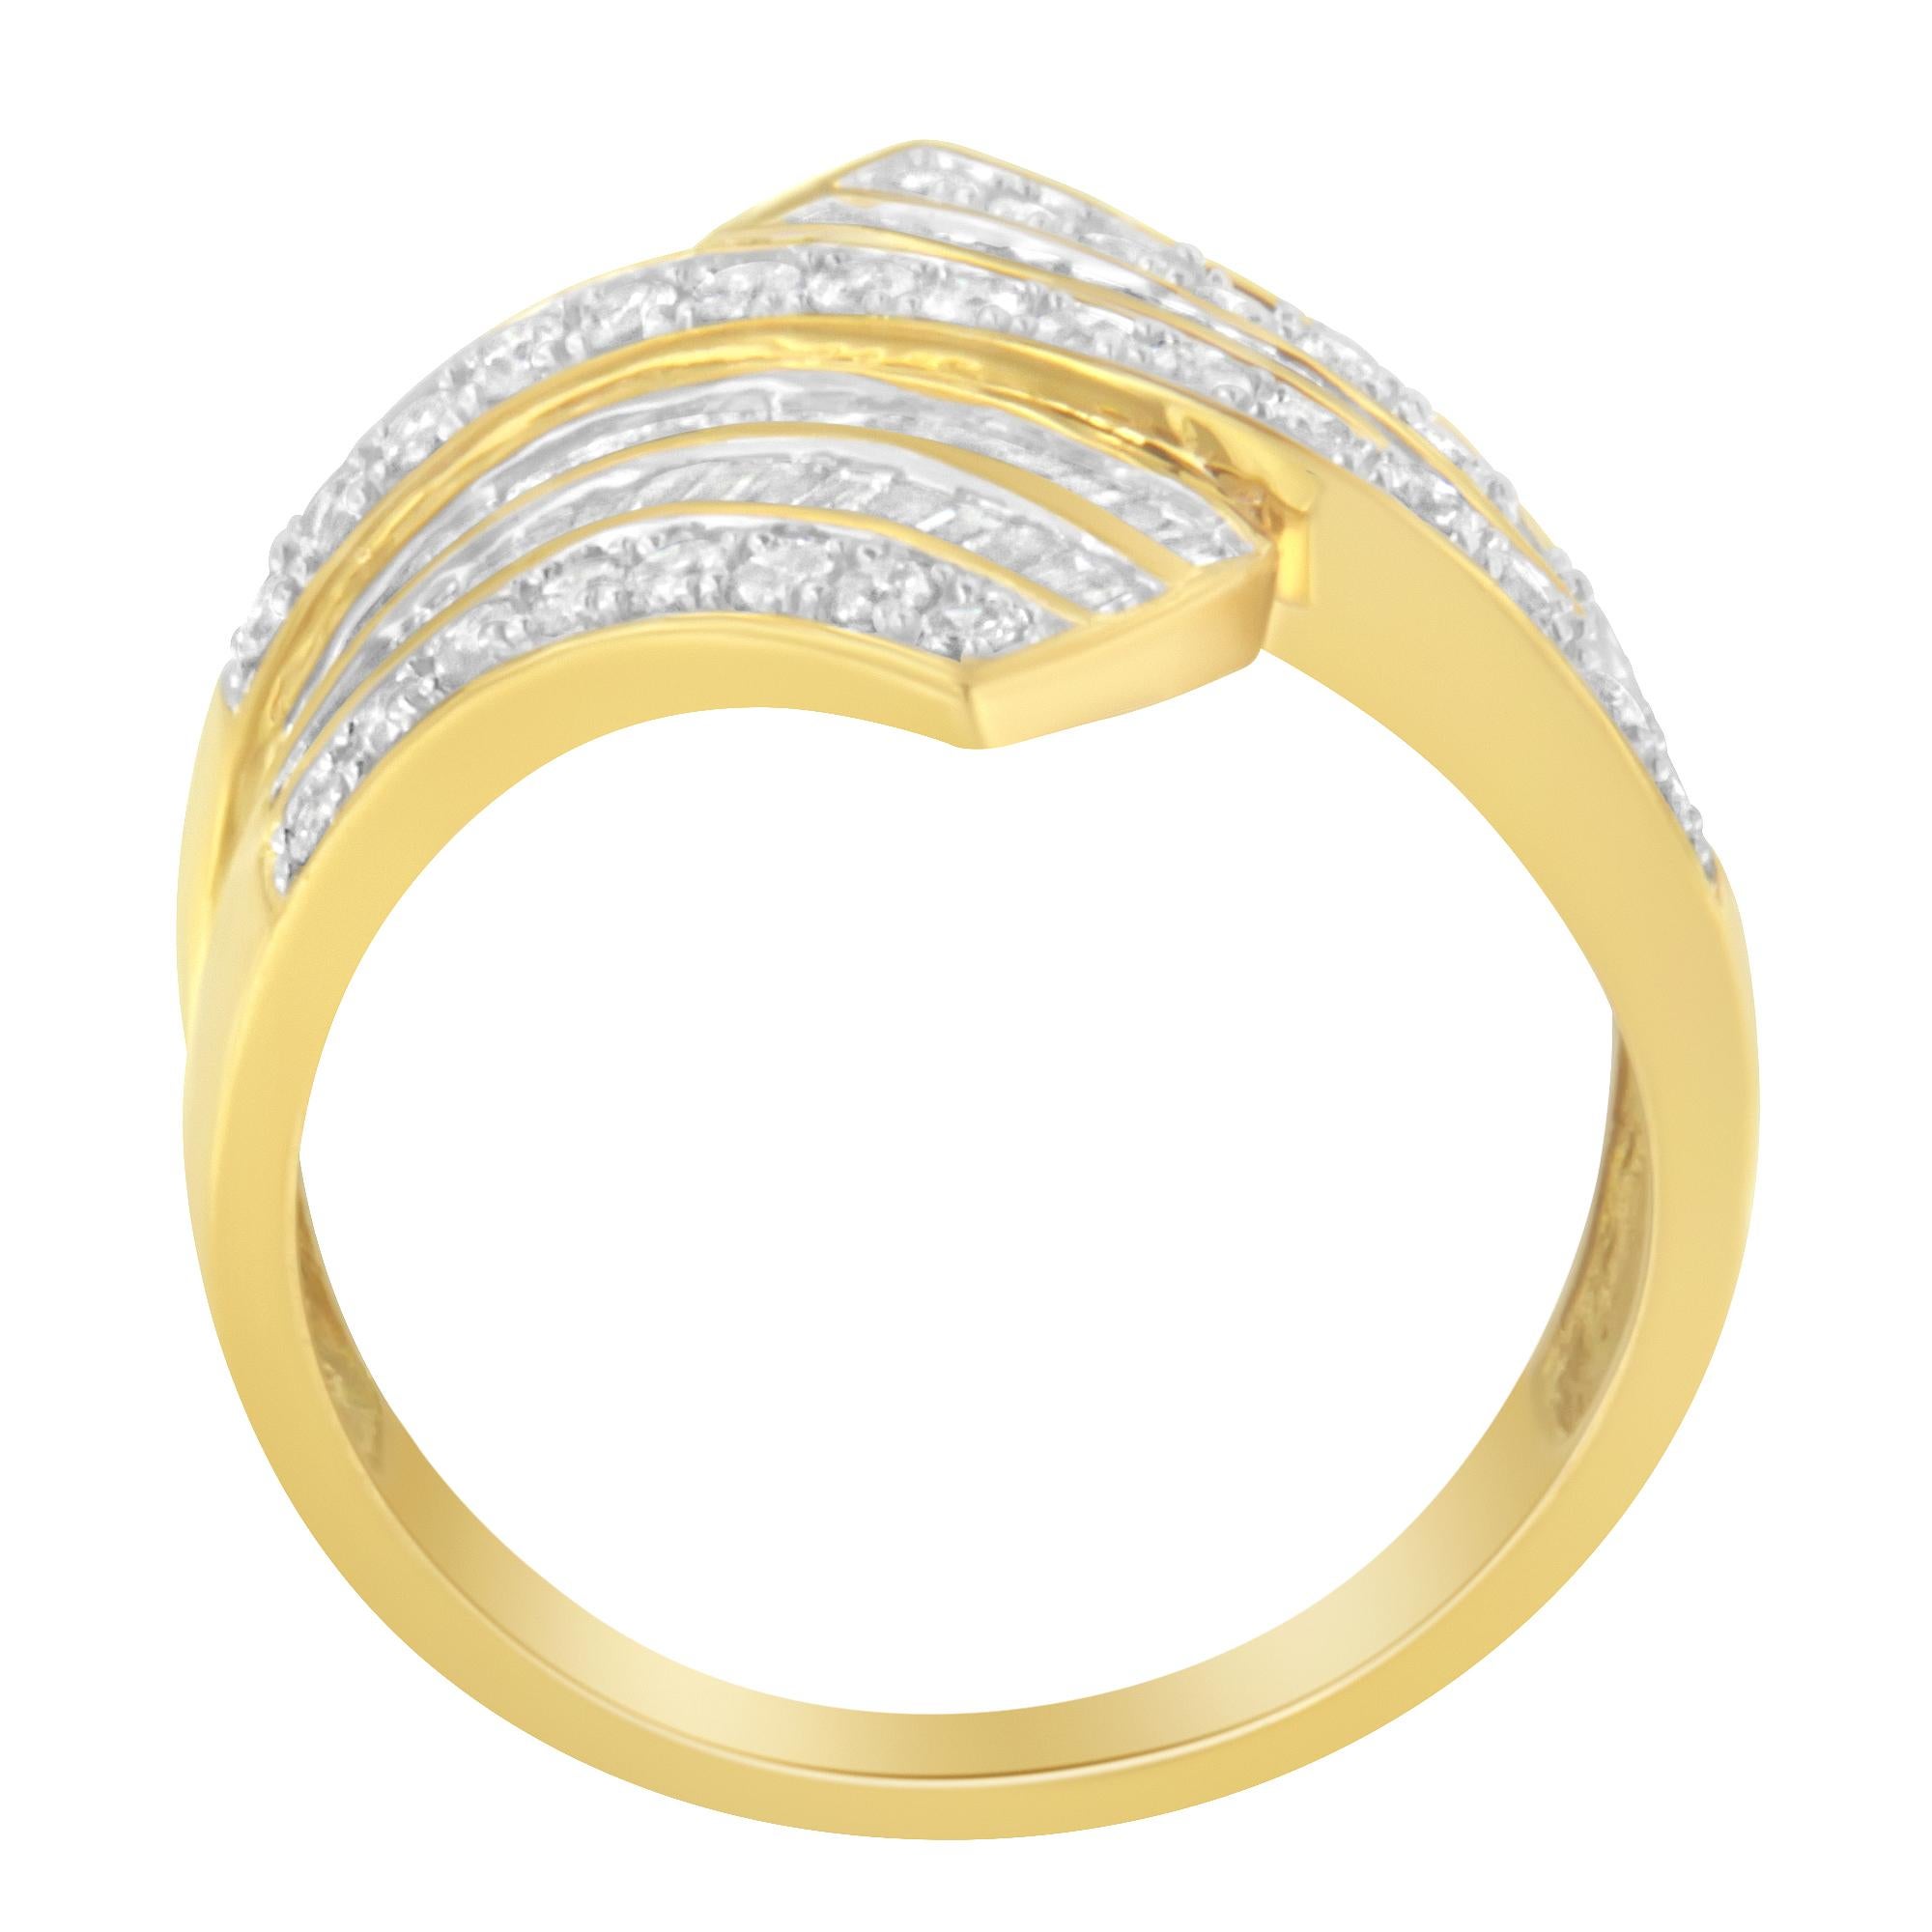 Im Angebot: 10K Gelbgold 1 1/7 Karat Diamant-Bypass-Ring () 2